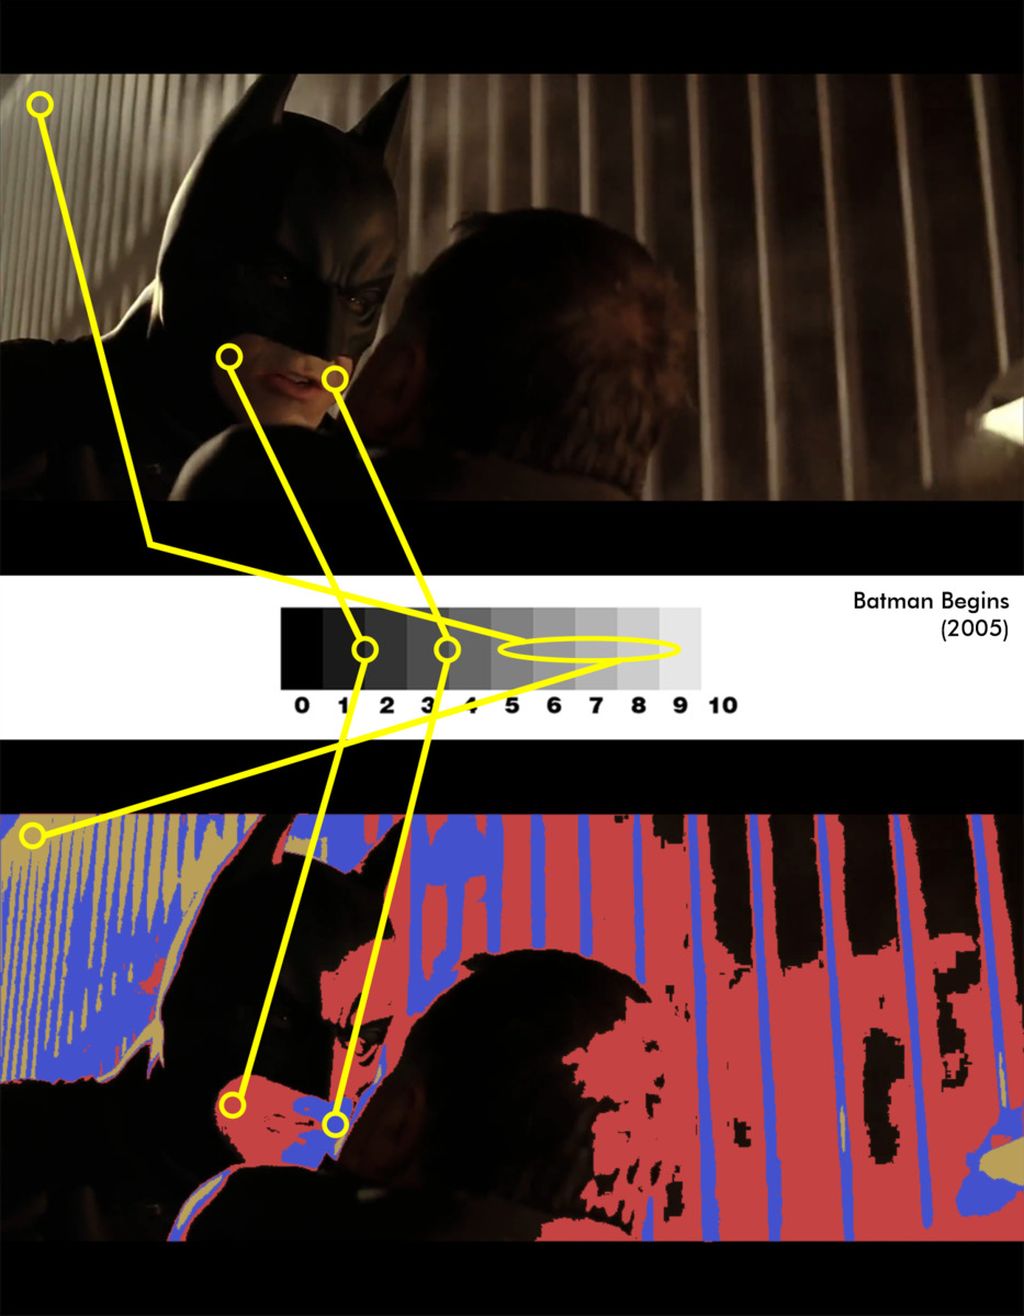 Menurut pembagian <i>zone system</i>, cahaya yang mengenai wajah Christian Bale (Bruce Wayne) berada diantara zona 3 dan 4.